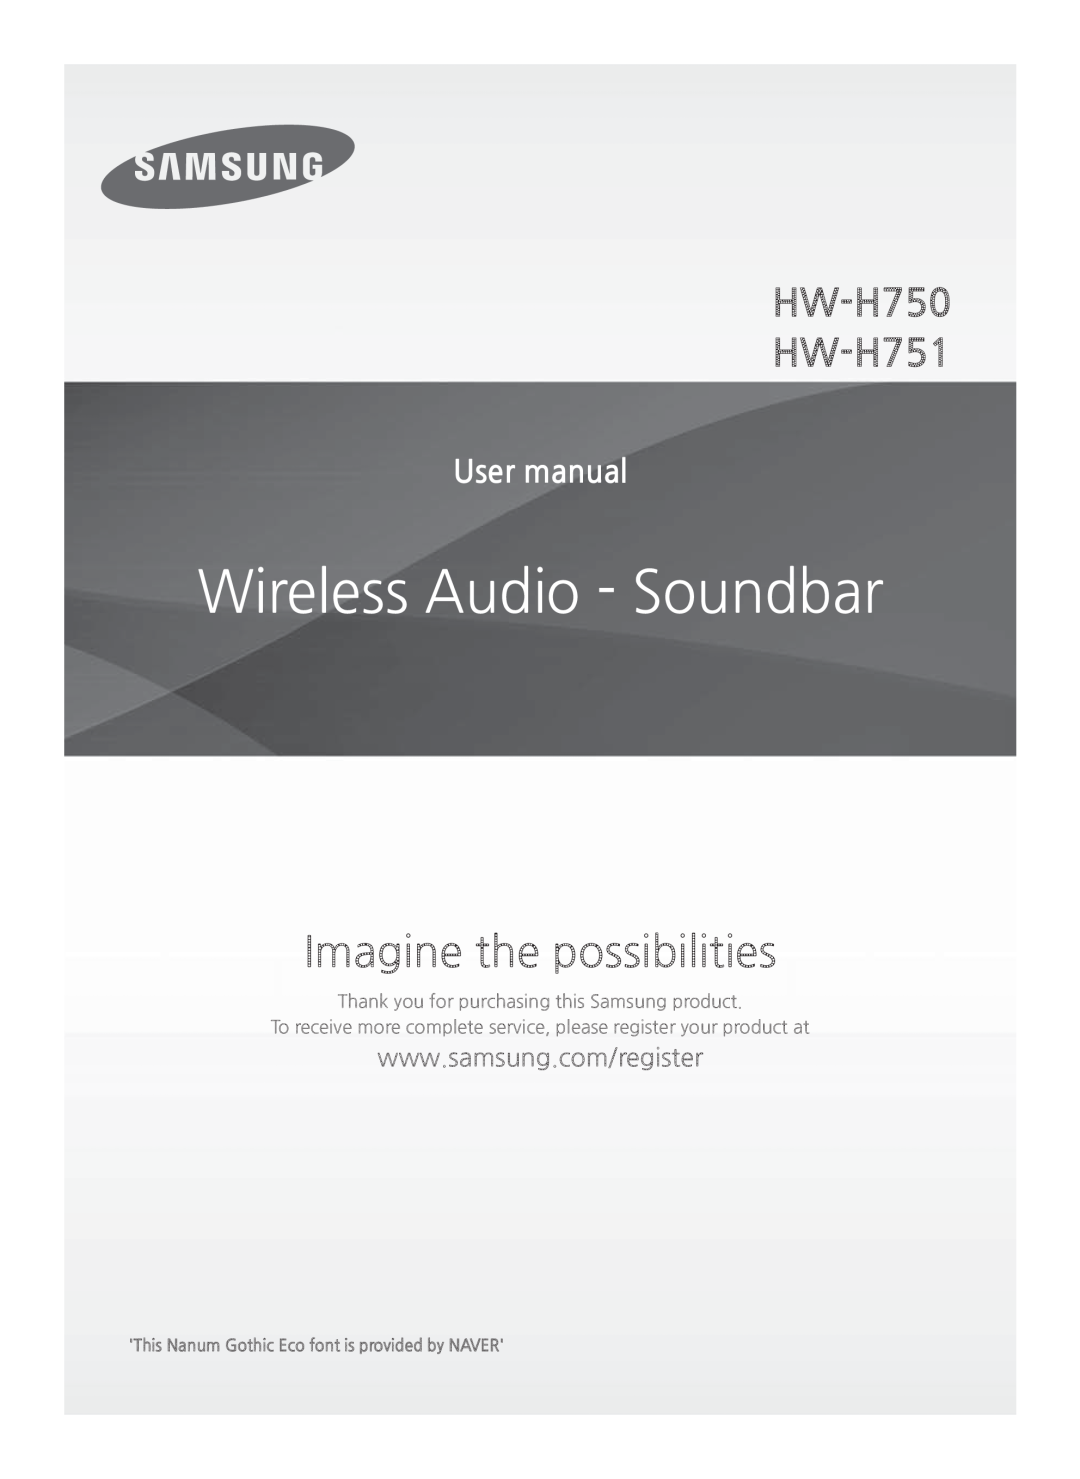 Samsung HW-H750/ZA manual Wireless Audio - Soundbar, Imagine the possibilities, HW-H750 HW-H751 